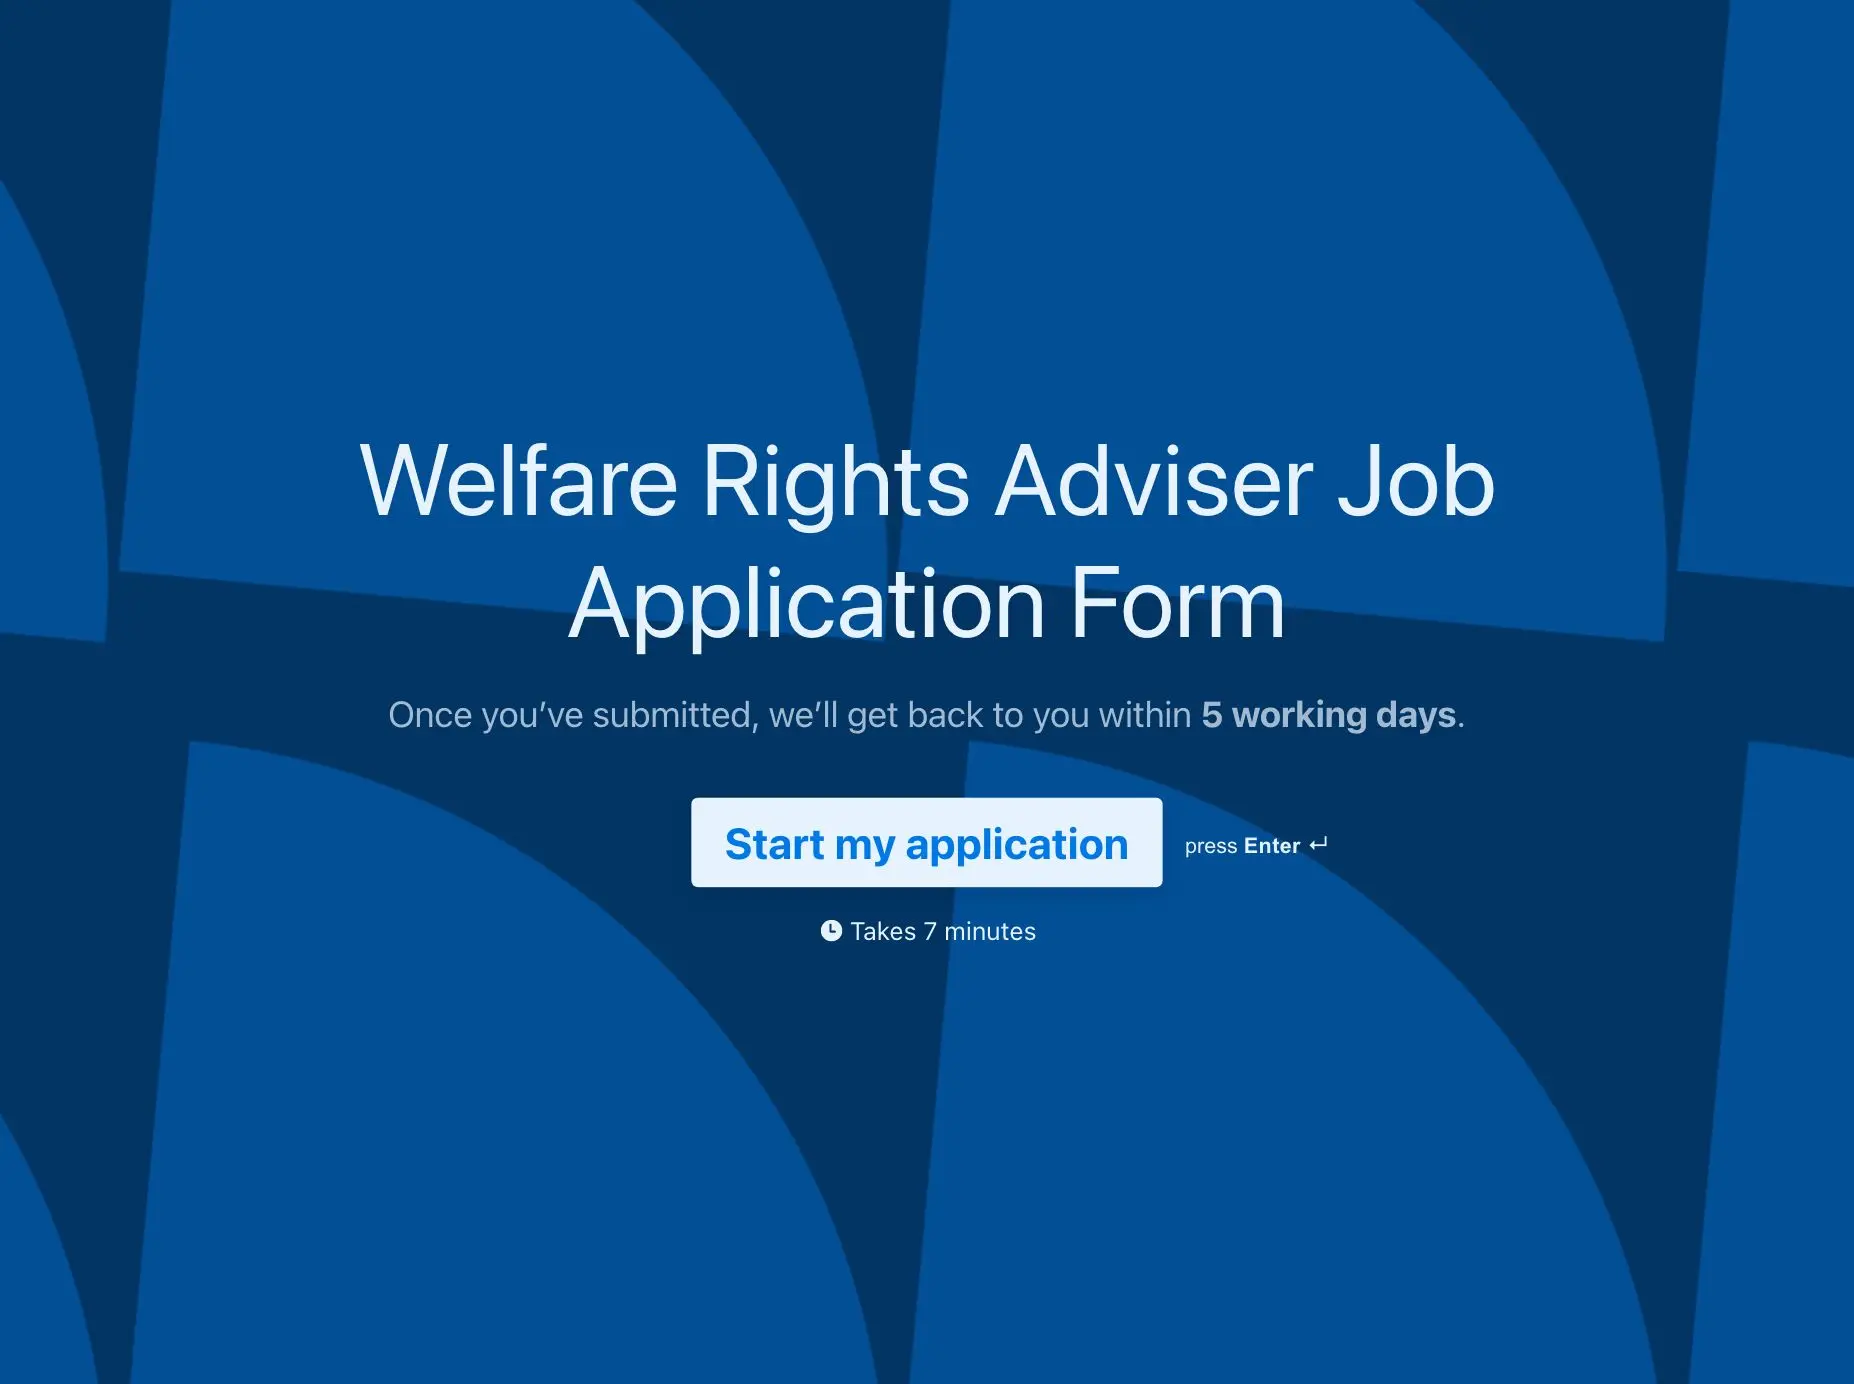 Welfare Rights Adviser Job Application Form Template Hero